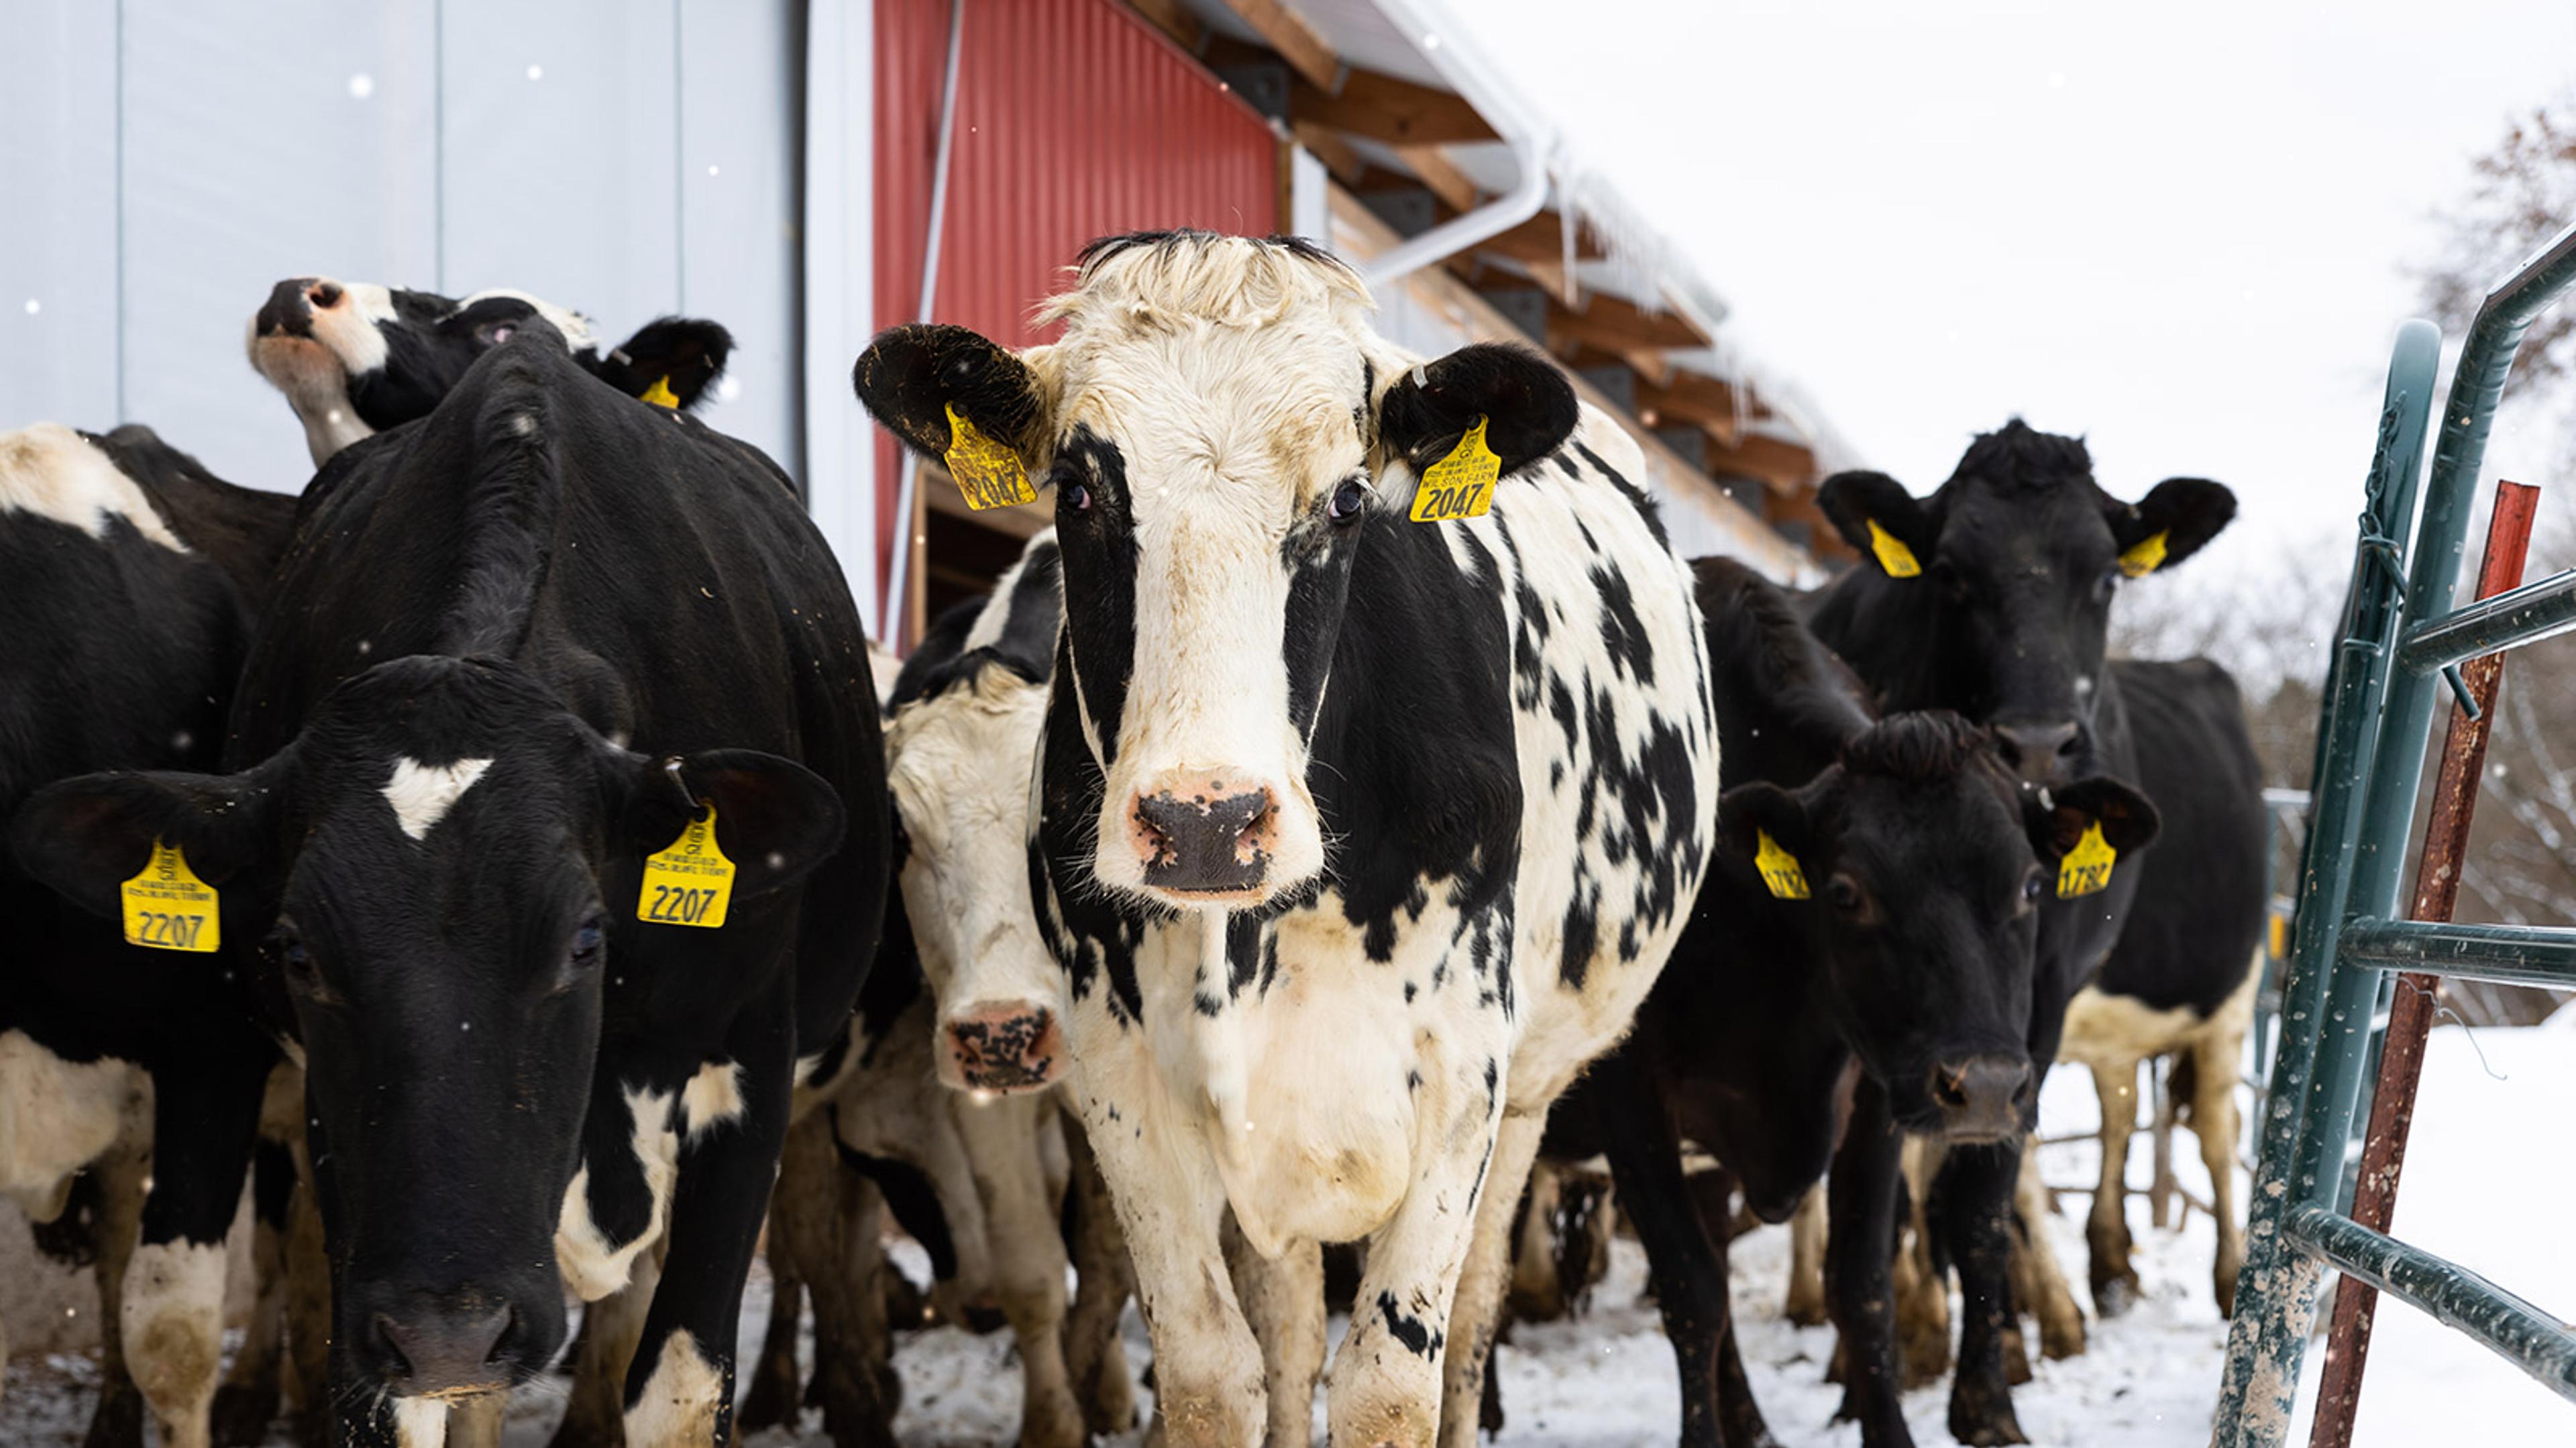 Curious cows examine the photographer as snow falls around them.